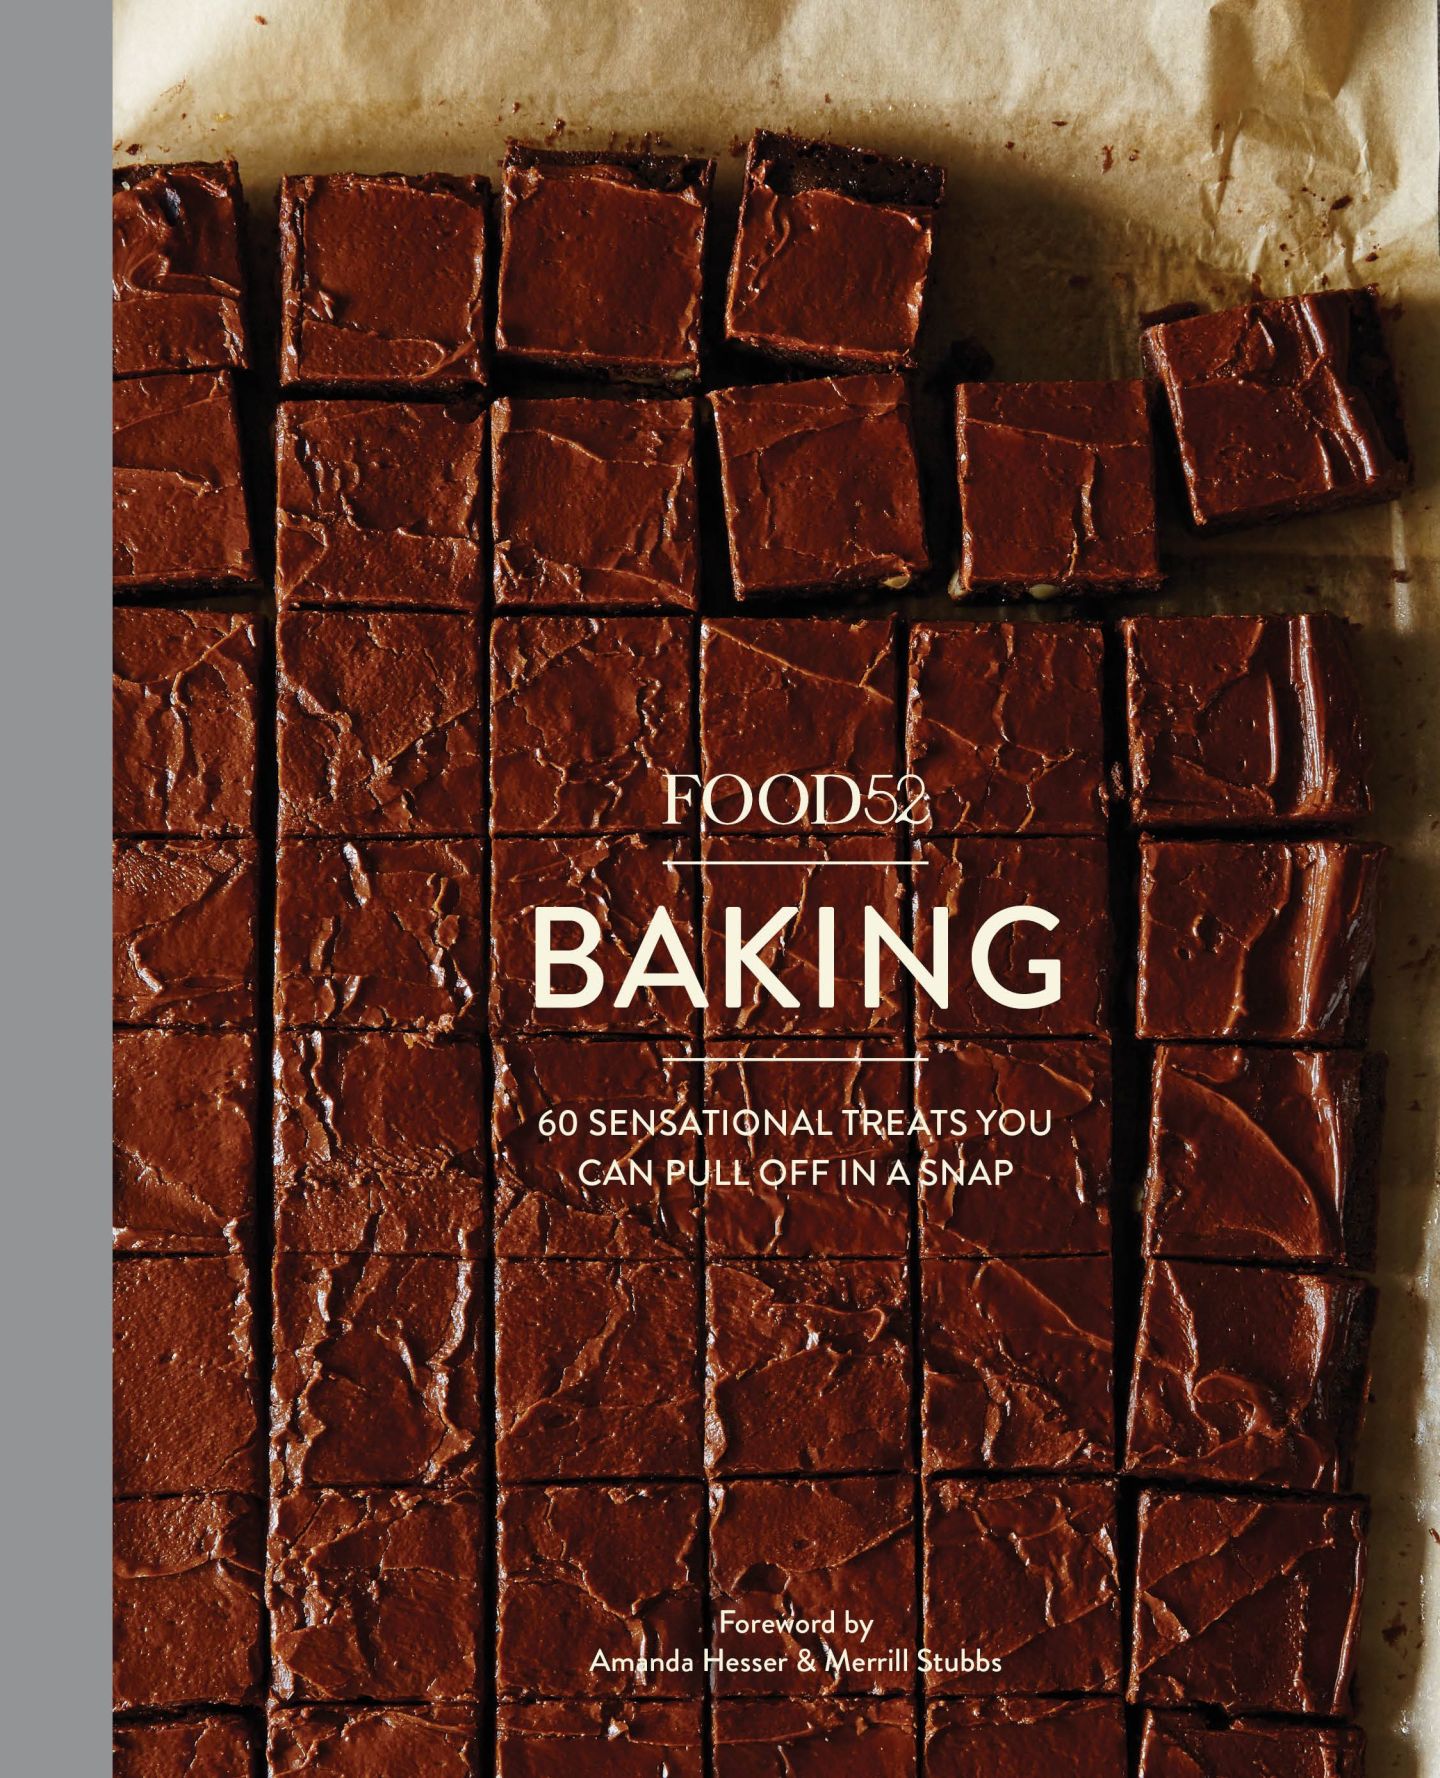 FOOD 52 Baking edited by Amanda Hesser and Merrill Stubbs